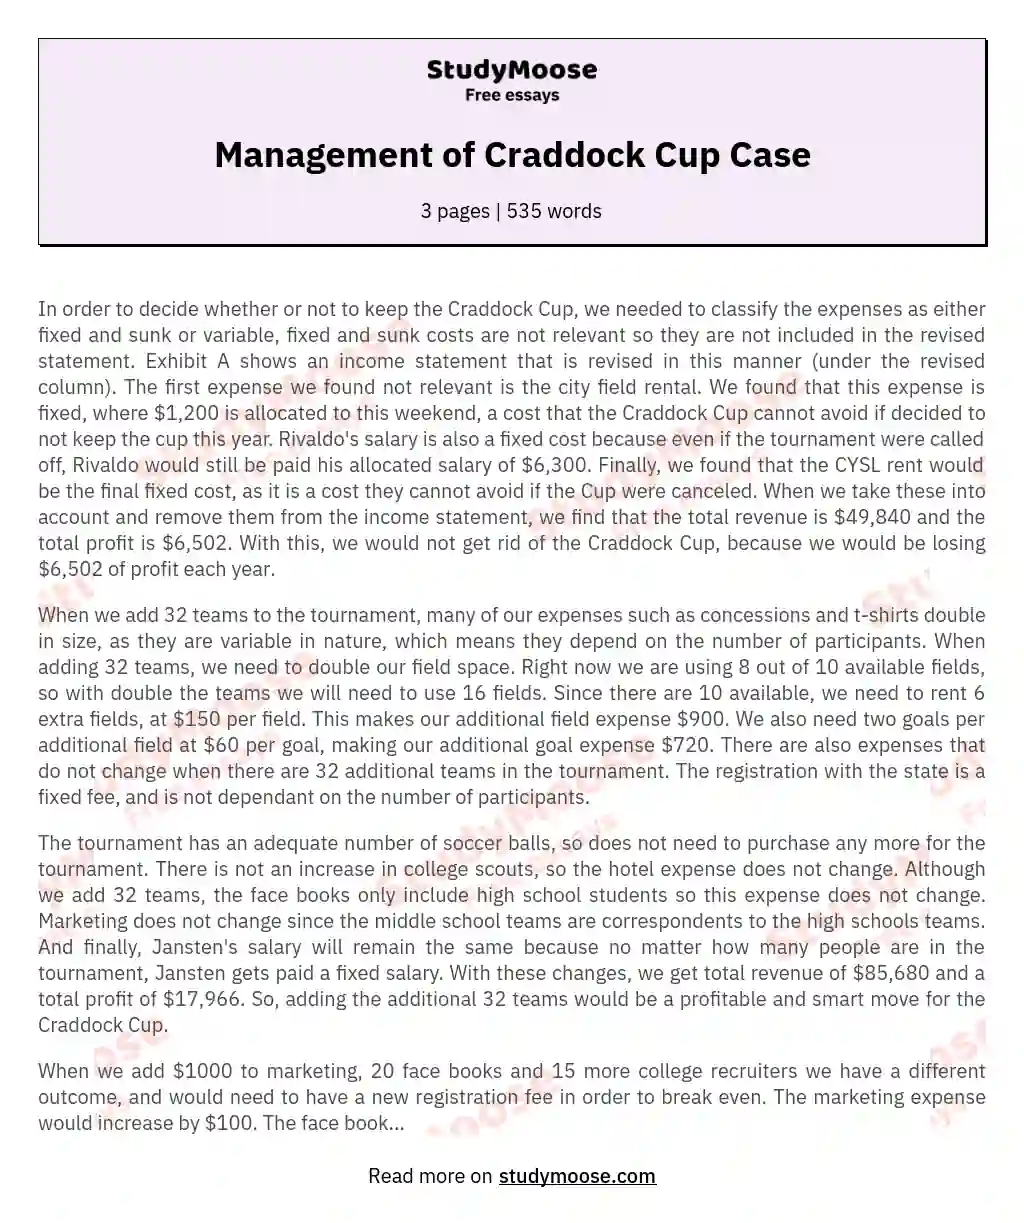 Management of Craddock Cup Case